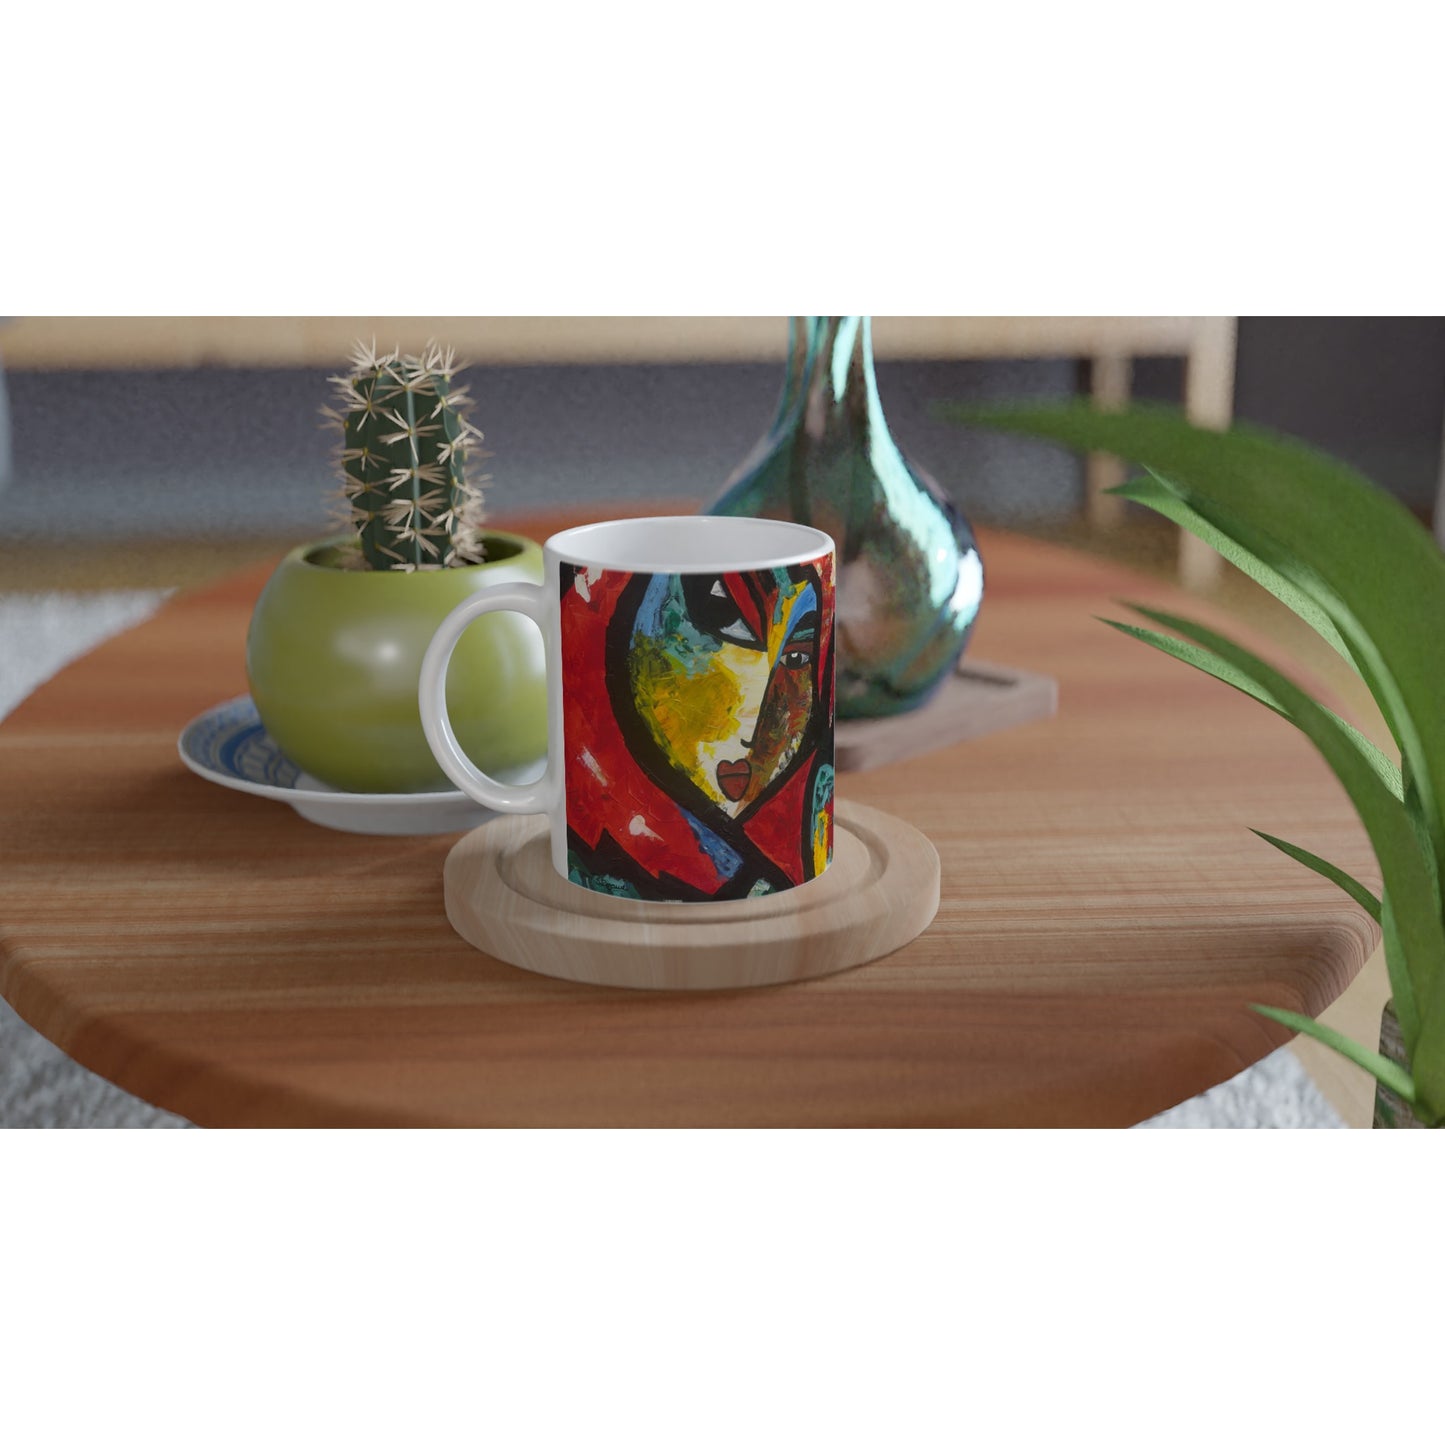 "La Belle d'Agay" Ceramic Mug